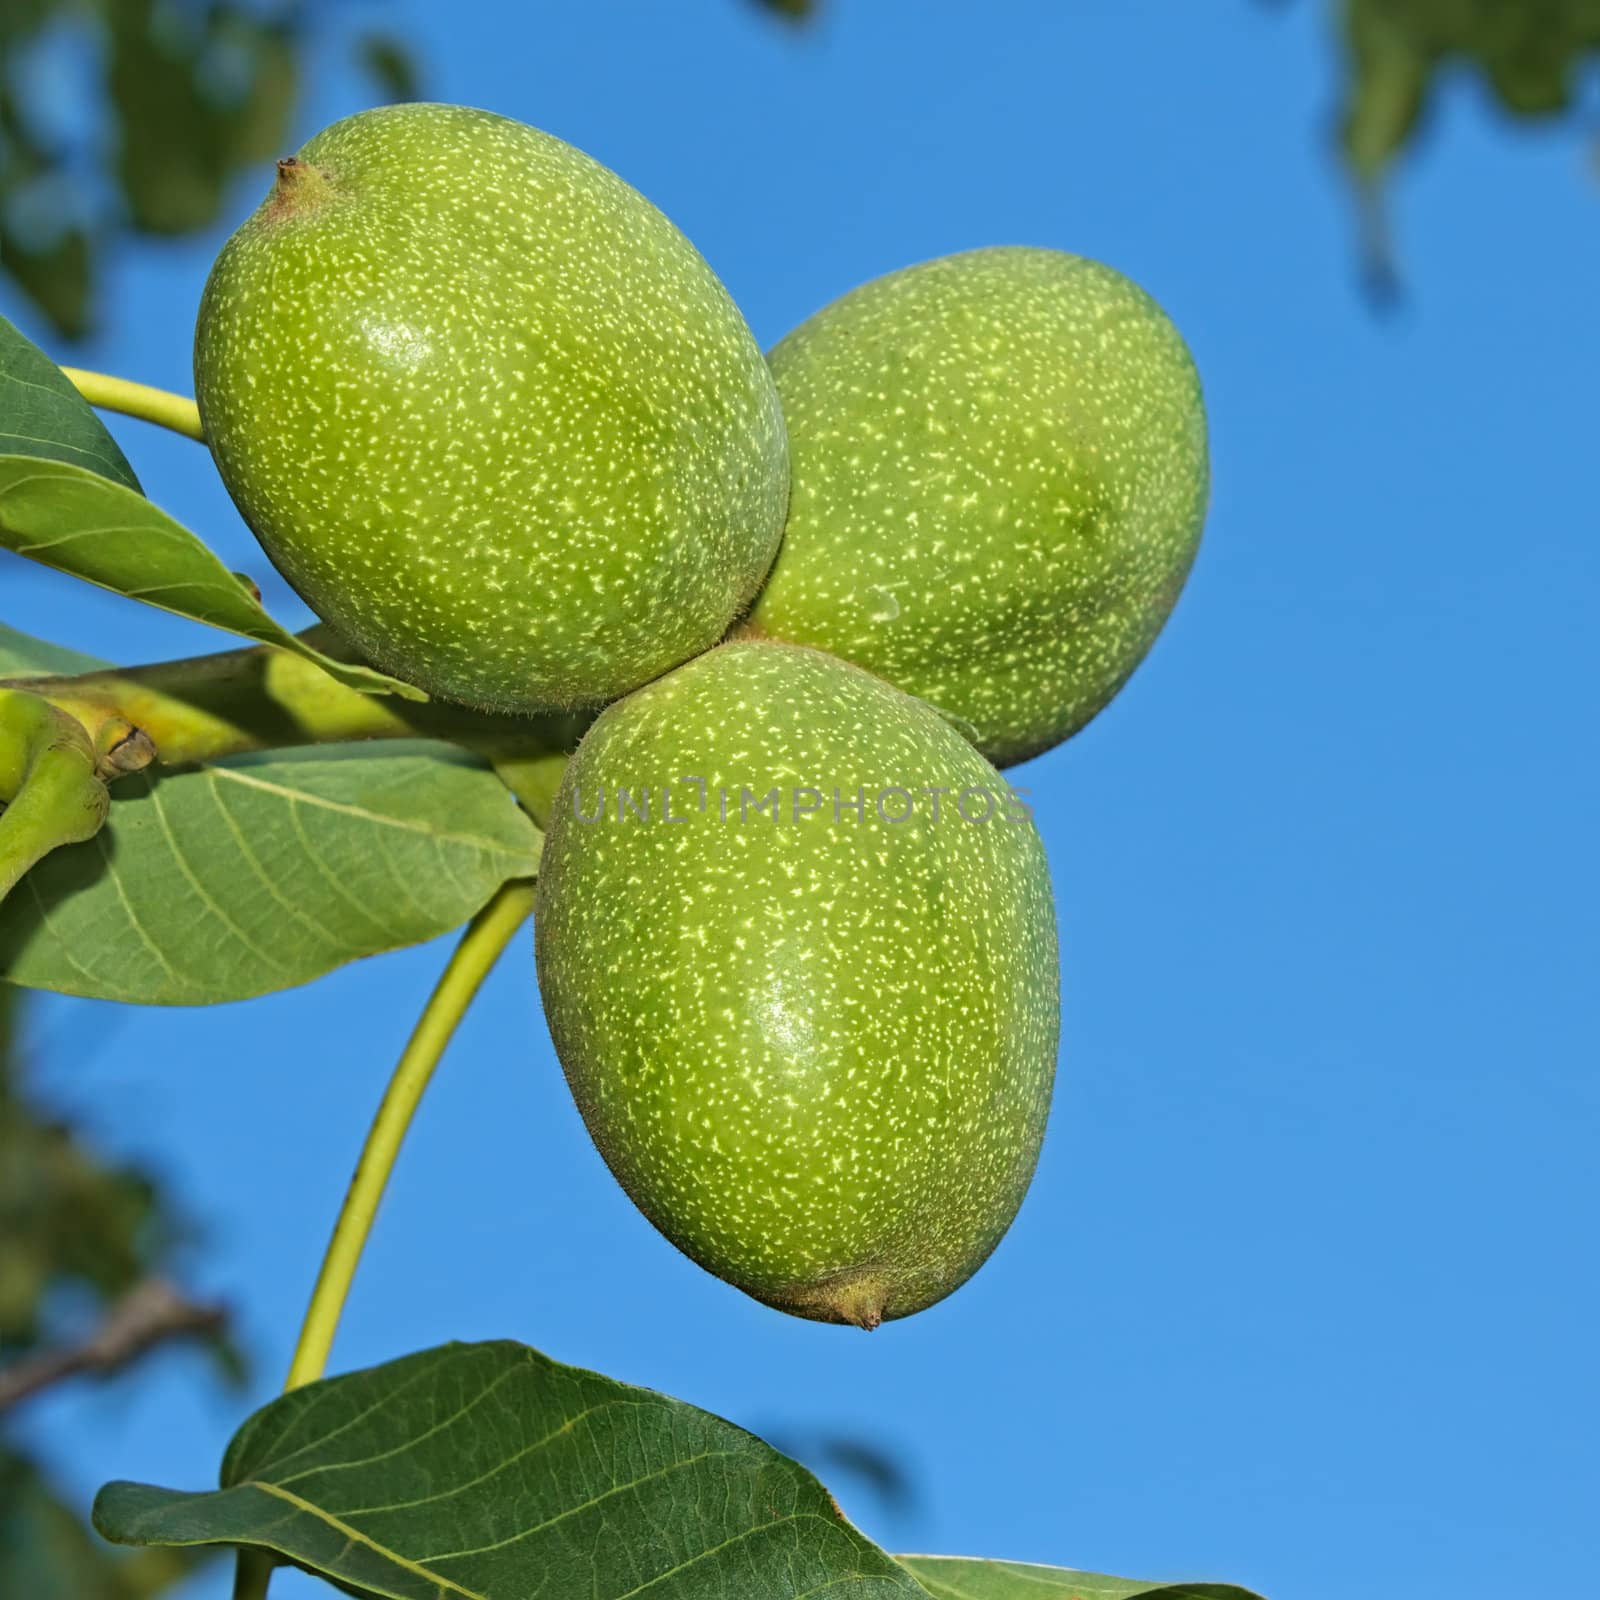 Green Walnut fruits by qiiip